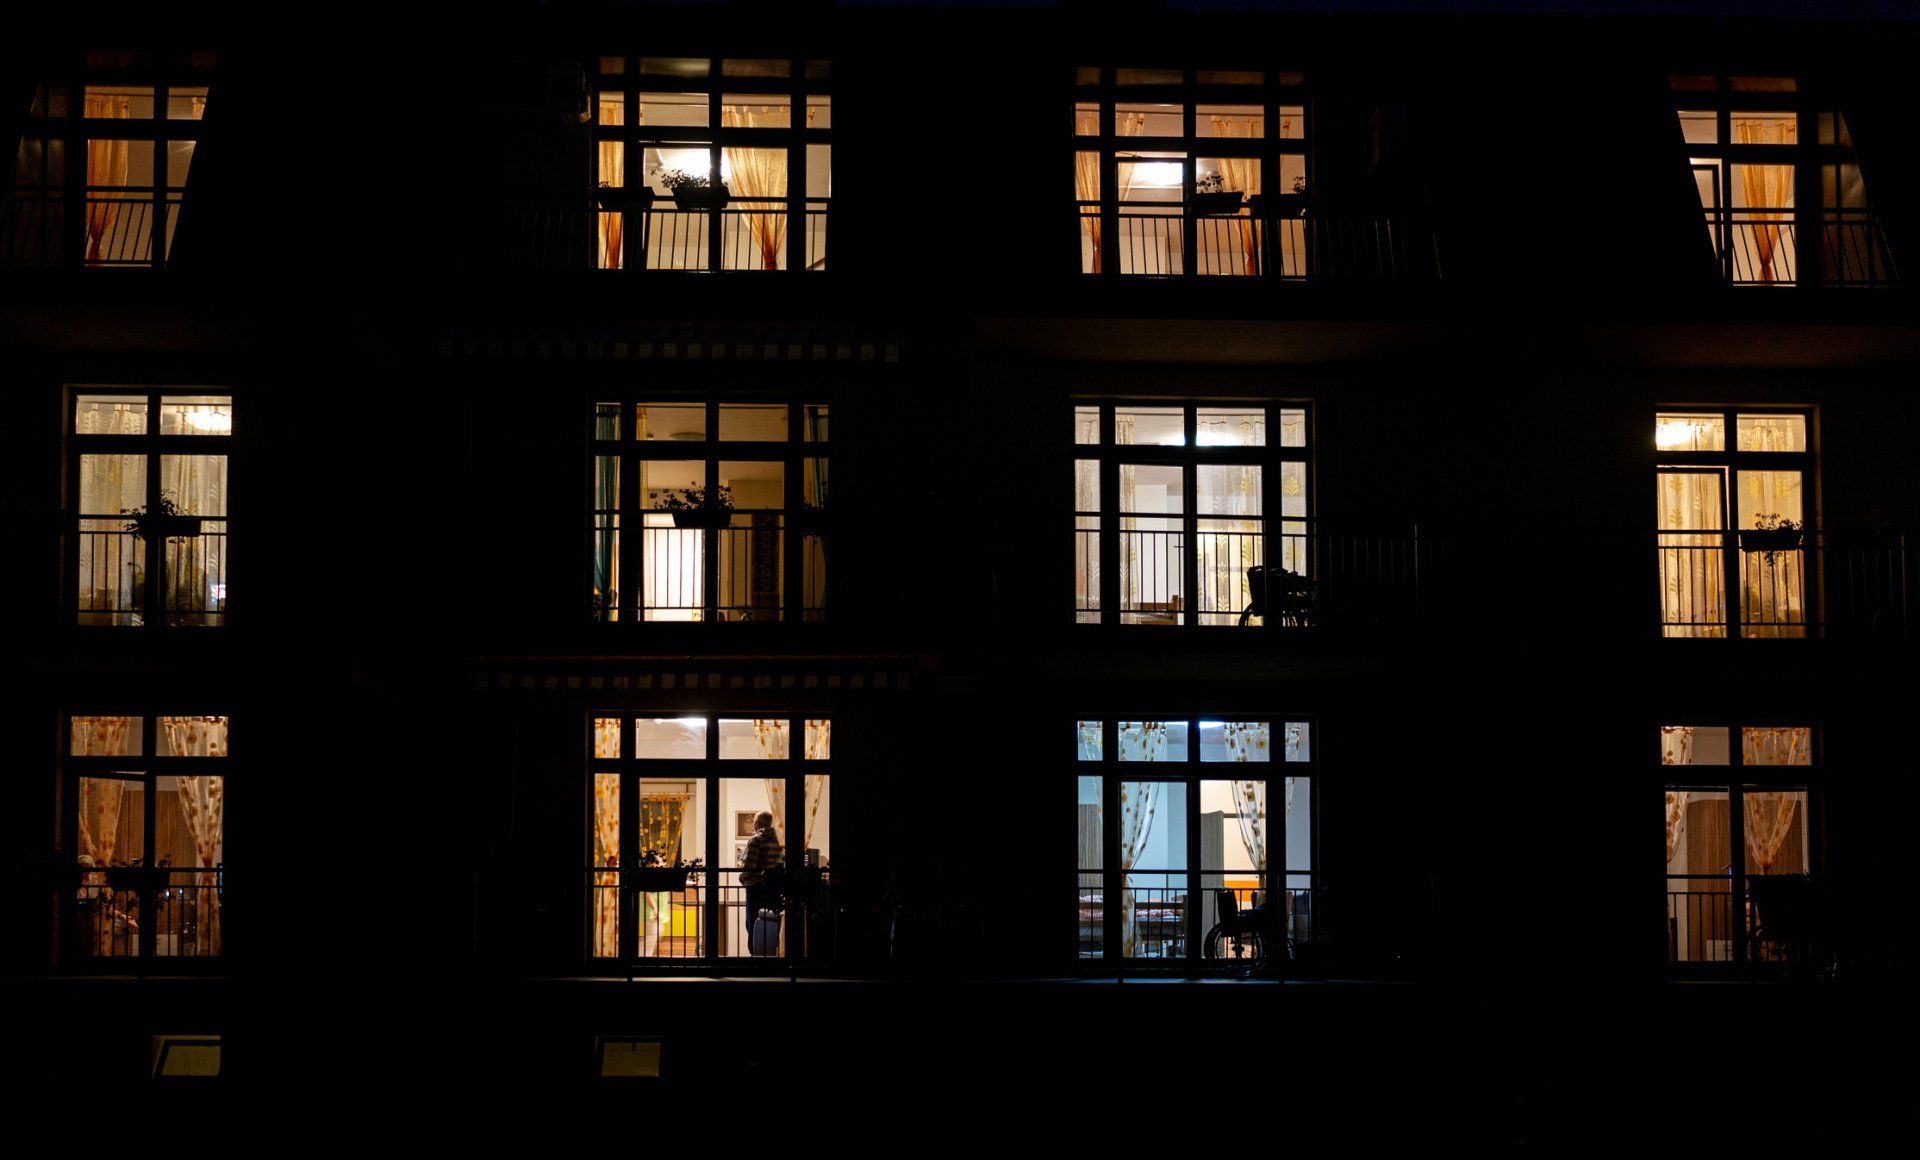 Illuminated Windows Of Night House With People Inside - Hendersonville, NC - Tucker Heating & Air